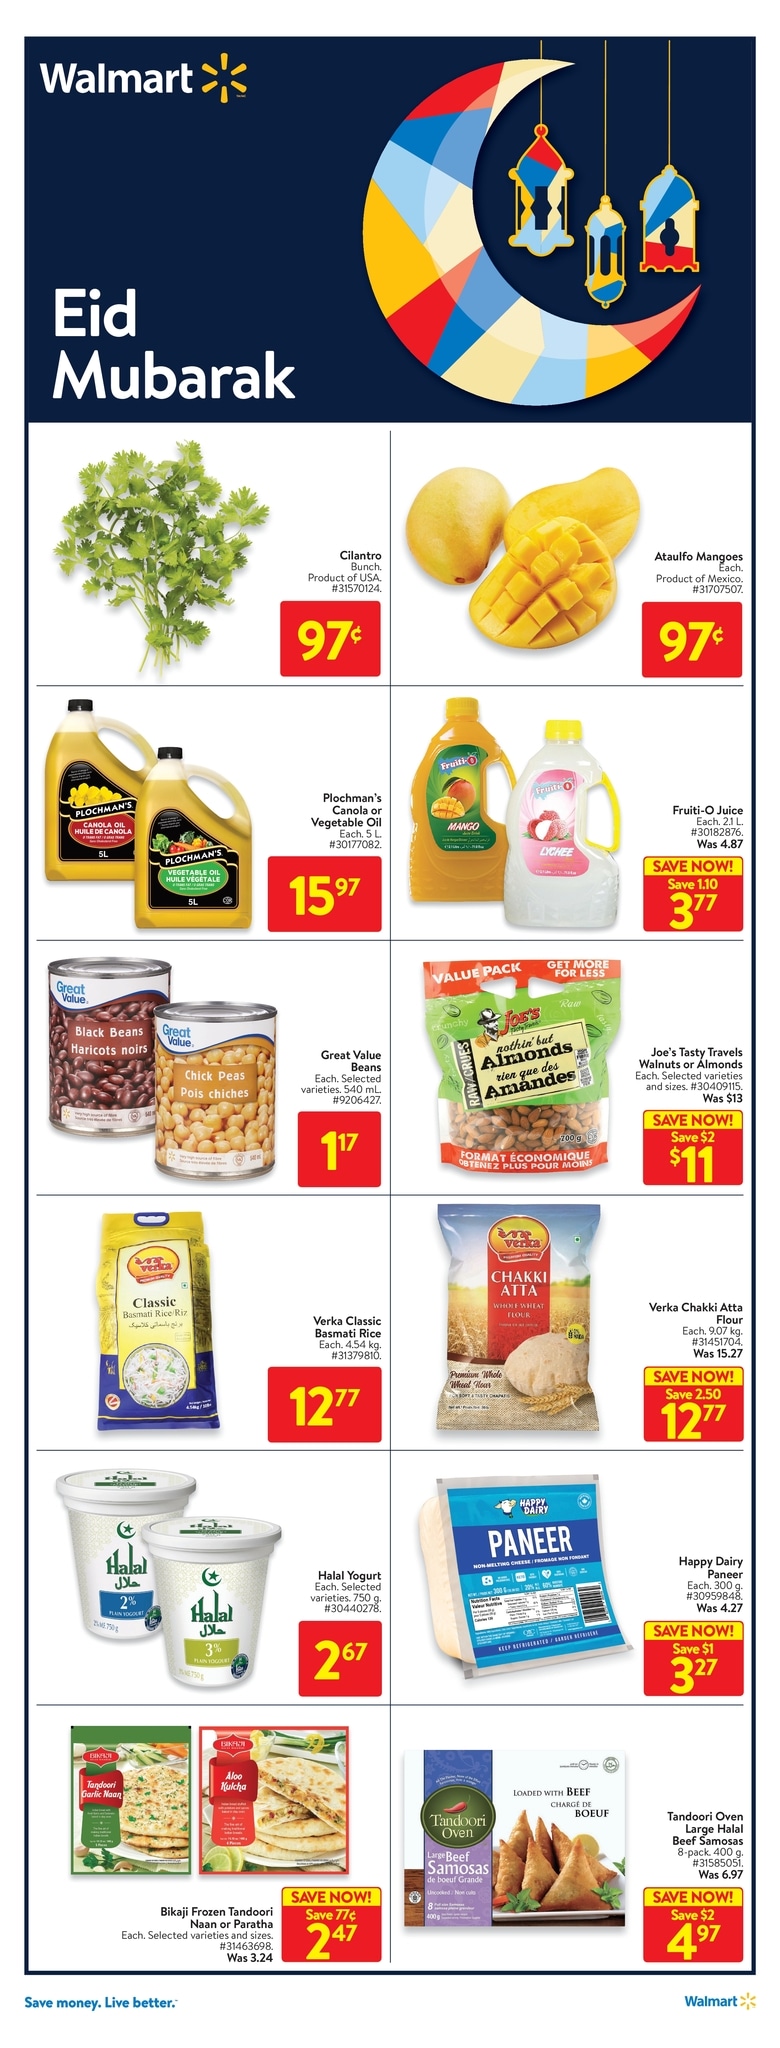 Walmart - Weekly Flyer Specials - Page 5